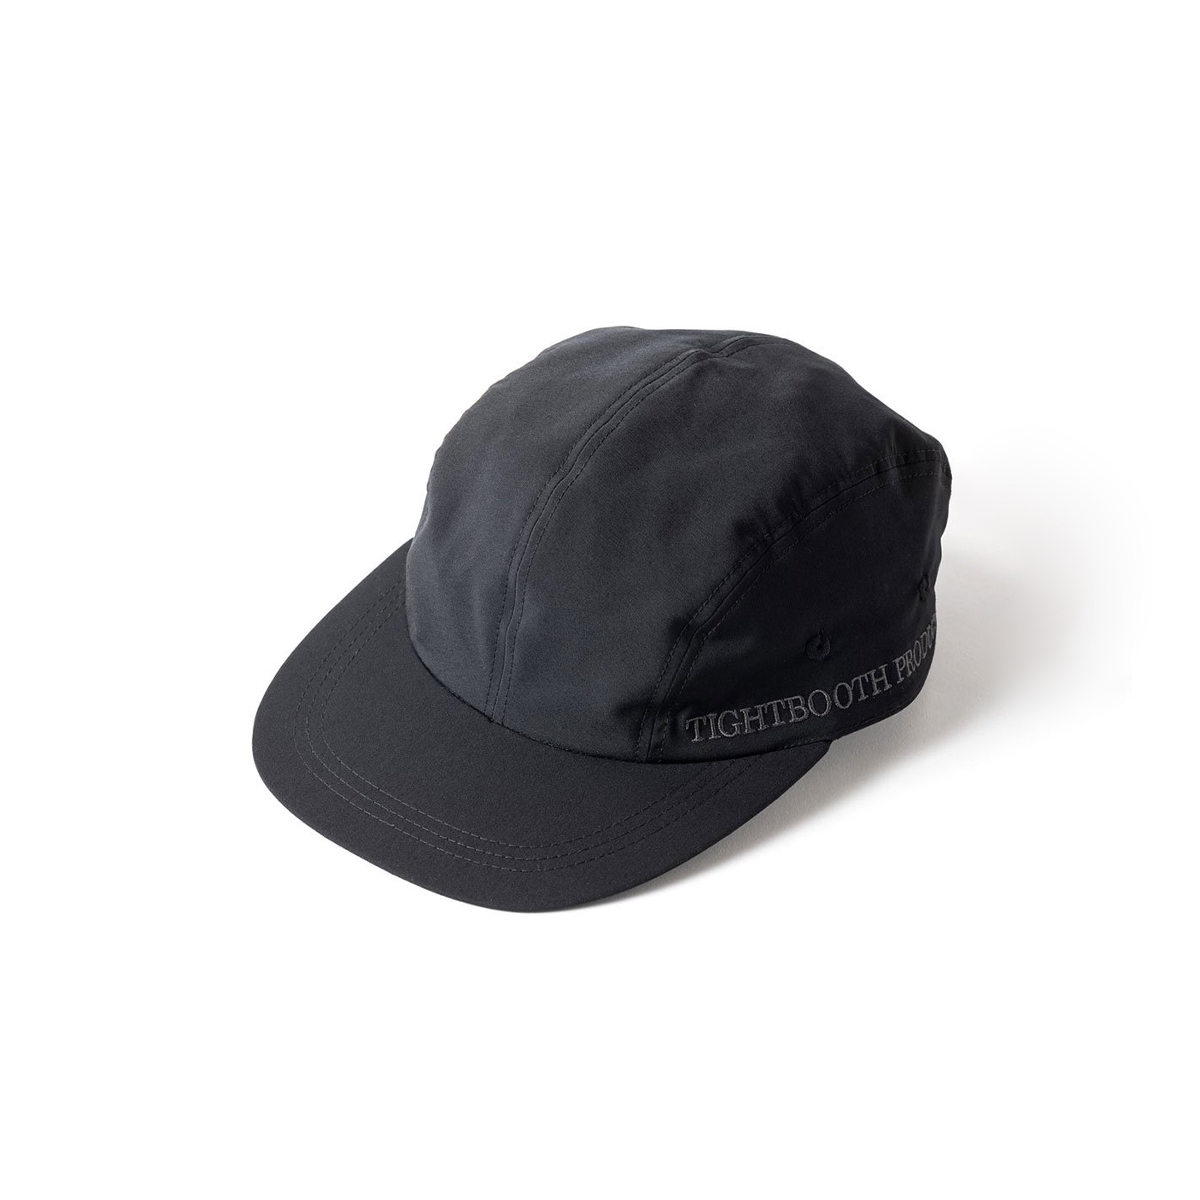 tightbooth cap black-